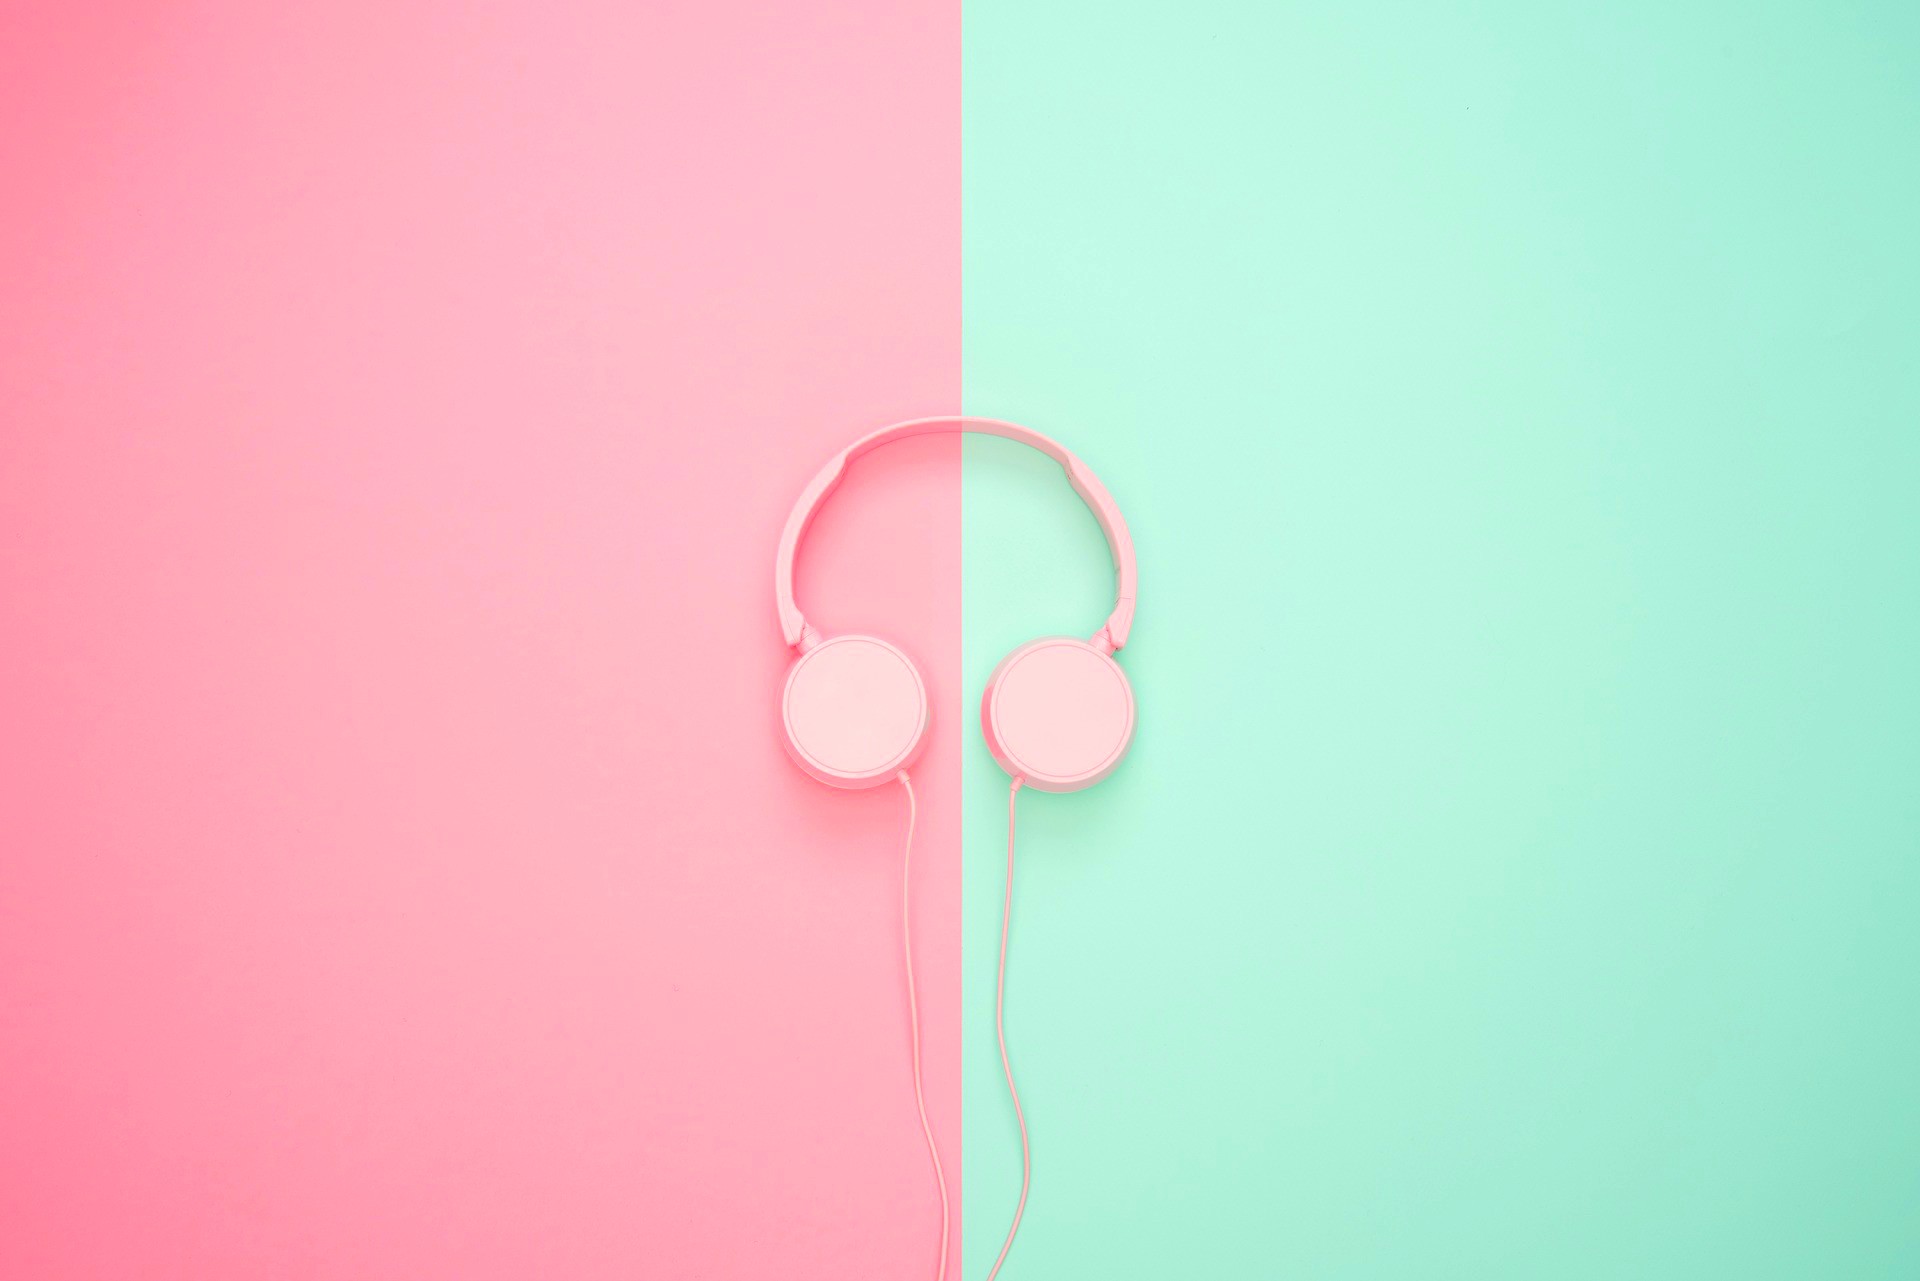 <img src="ana.jpg" alt="ana headphones pink and blue flatlay" />